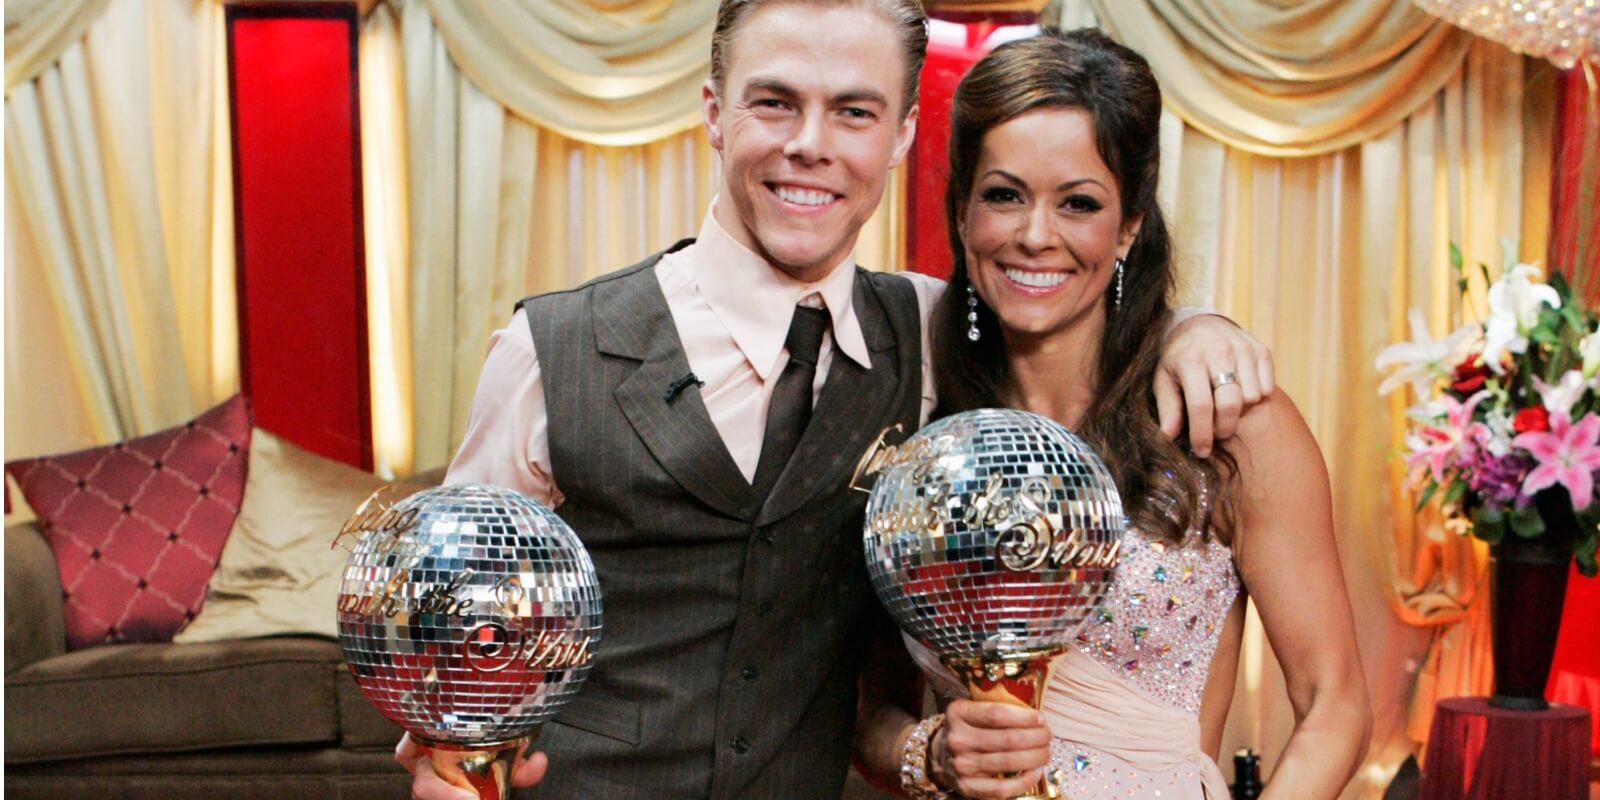 Derek Hough and Brooke Burke were the season 7 winners of 'Dancing With the Stars.'